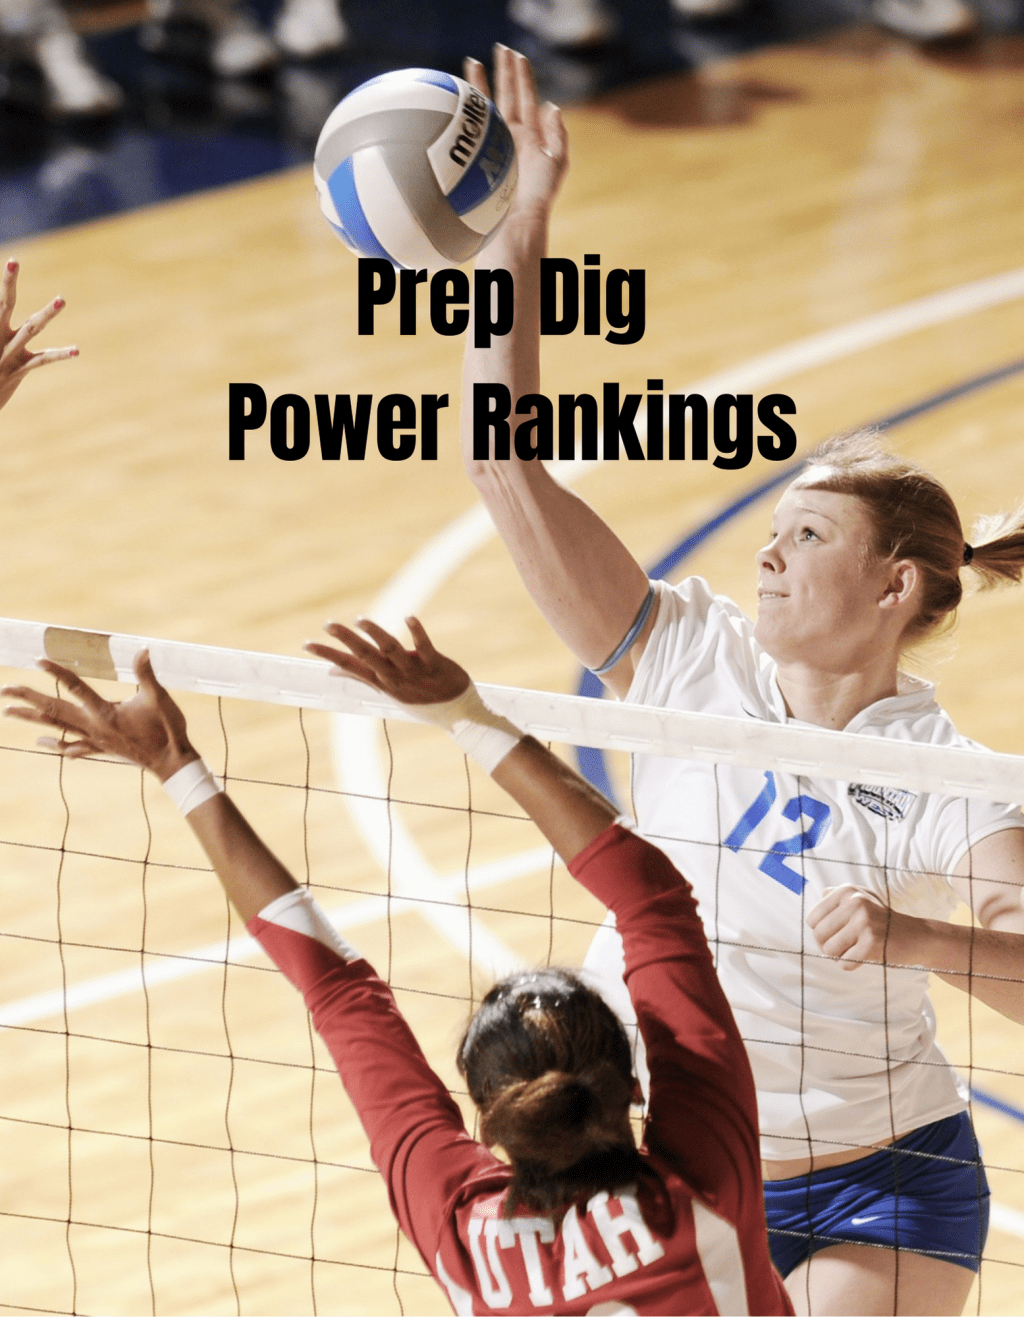 Prep Dig Power Rankings: No Major Shakeup